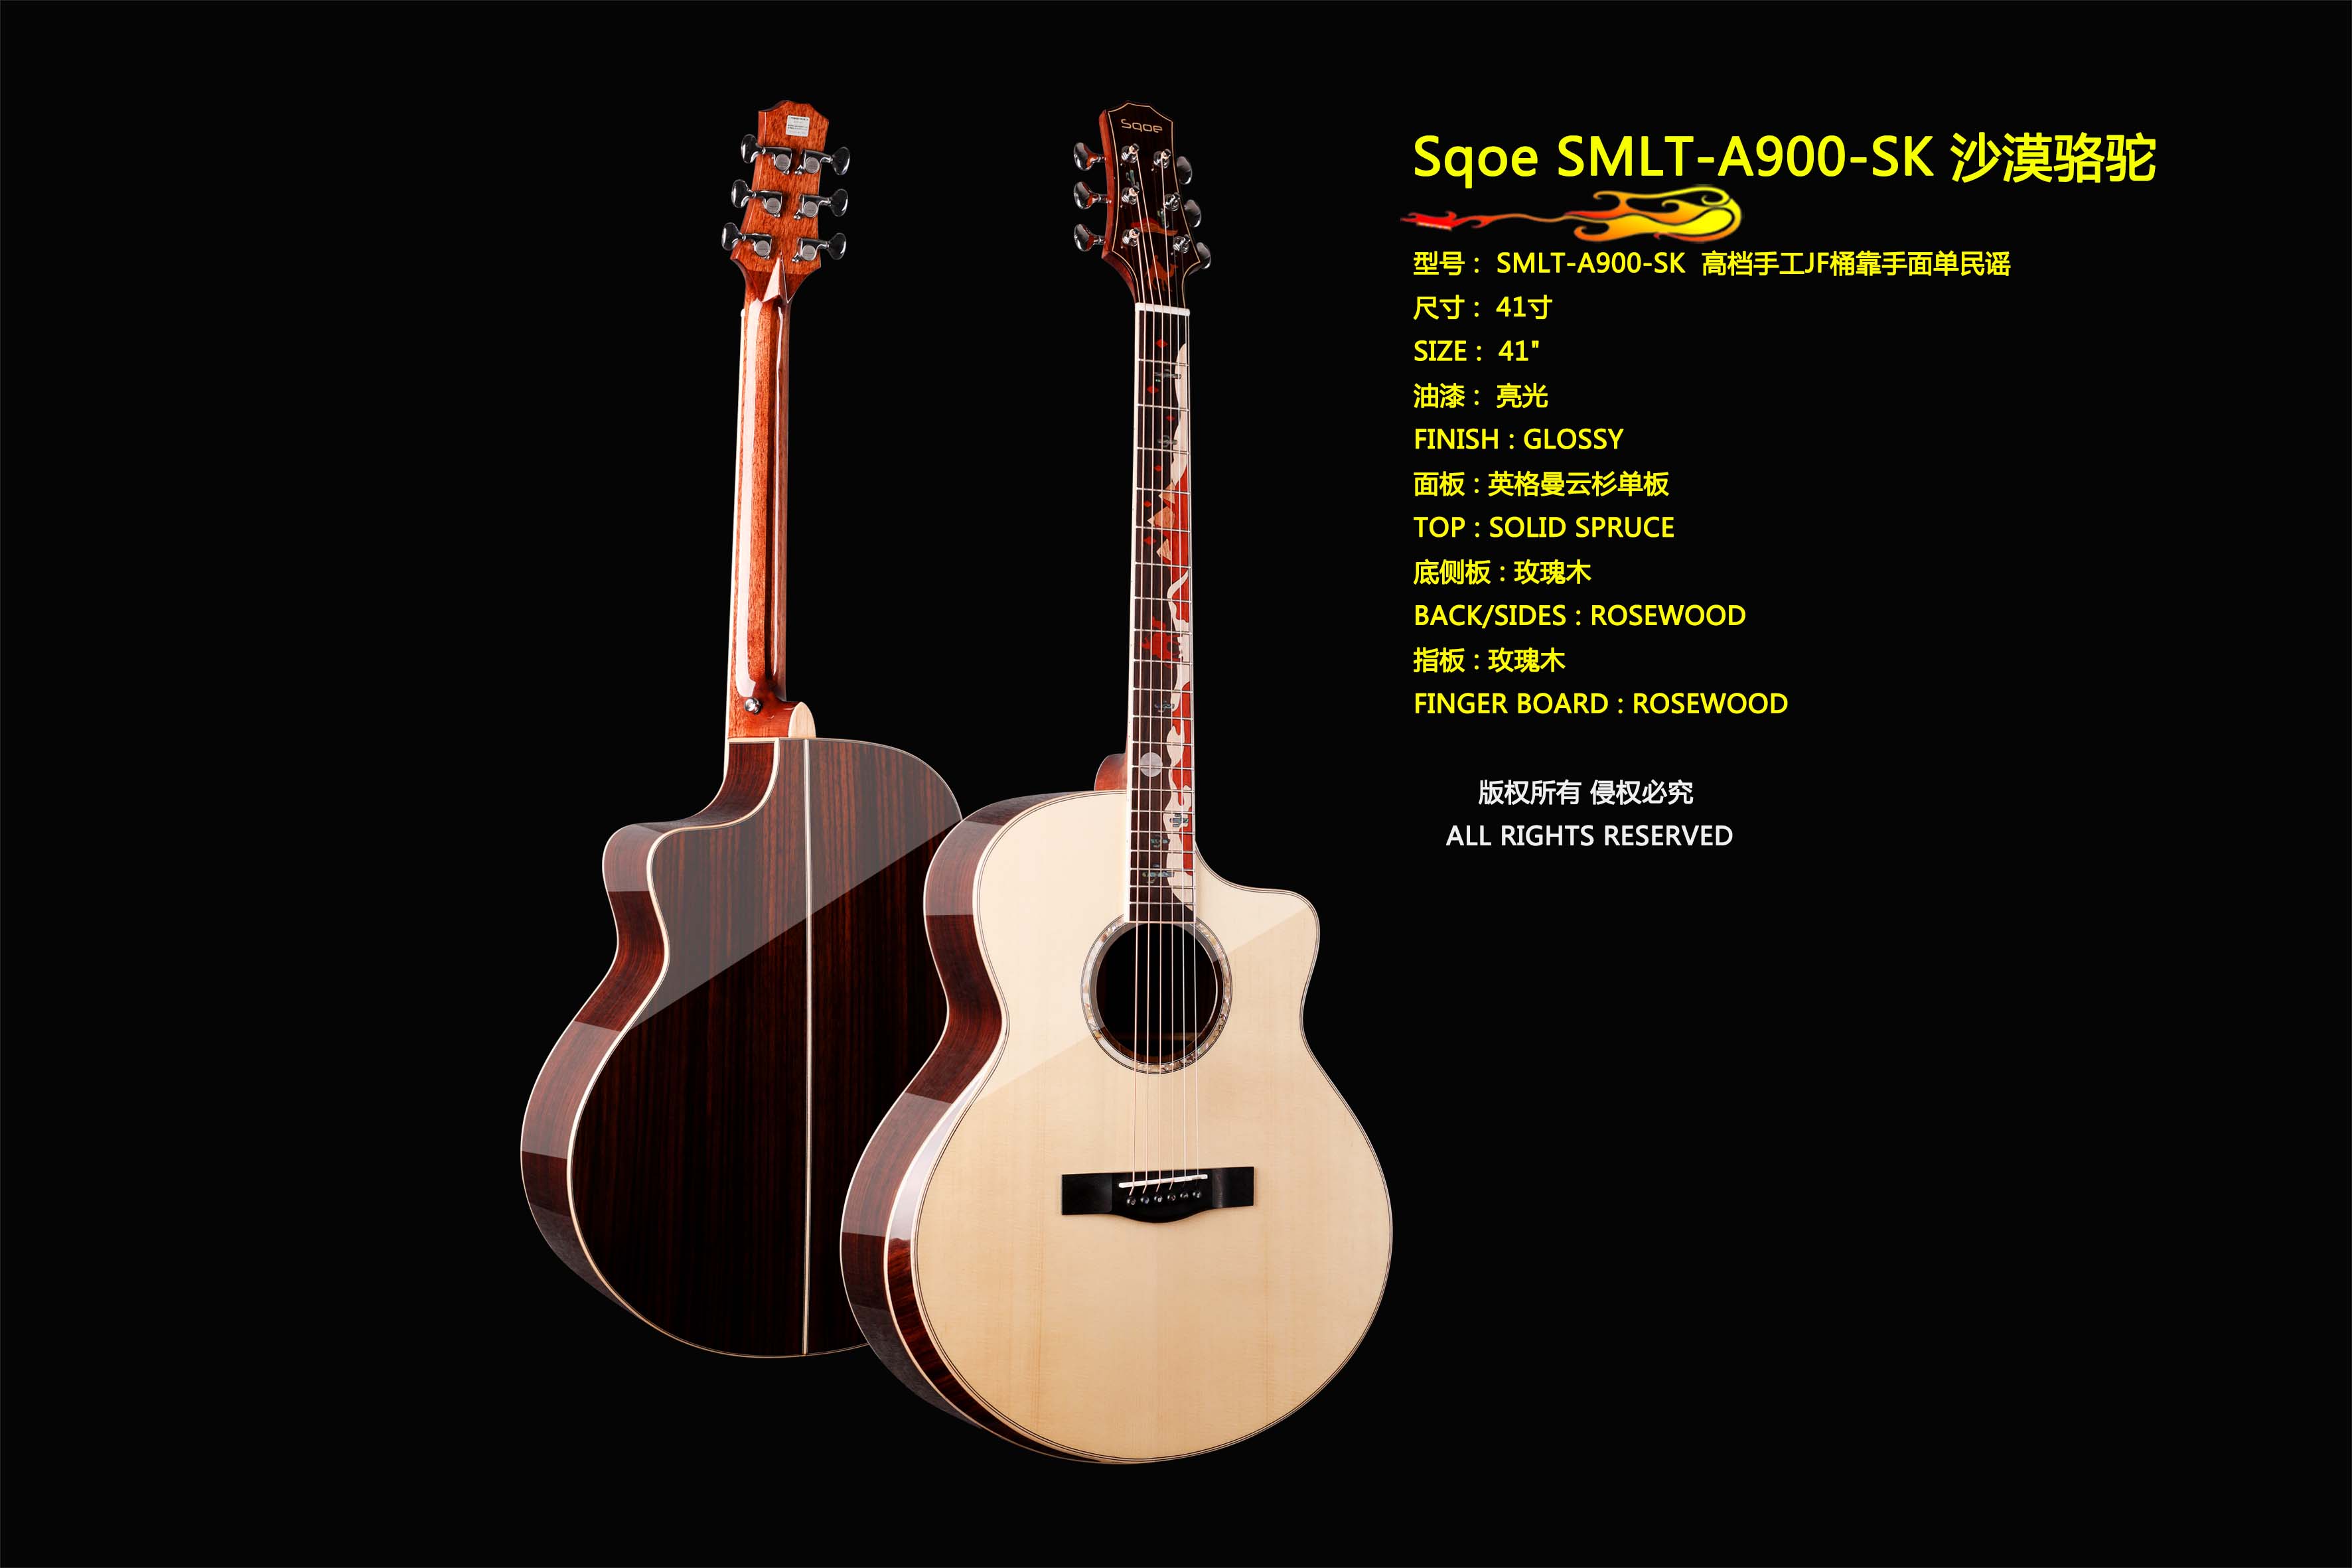 SMLT-A900-SK